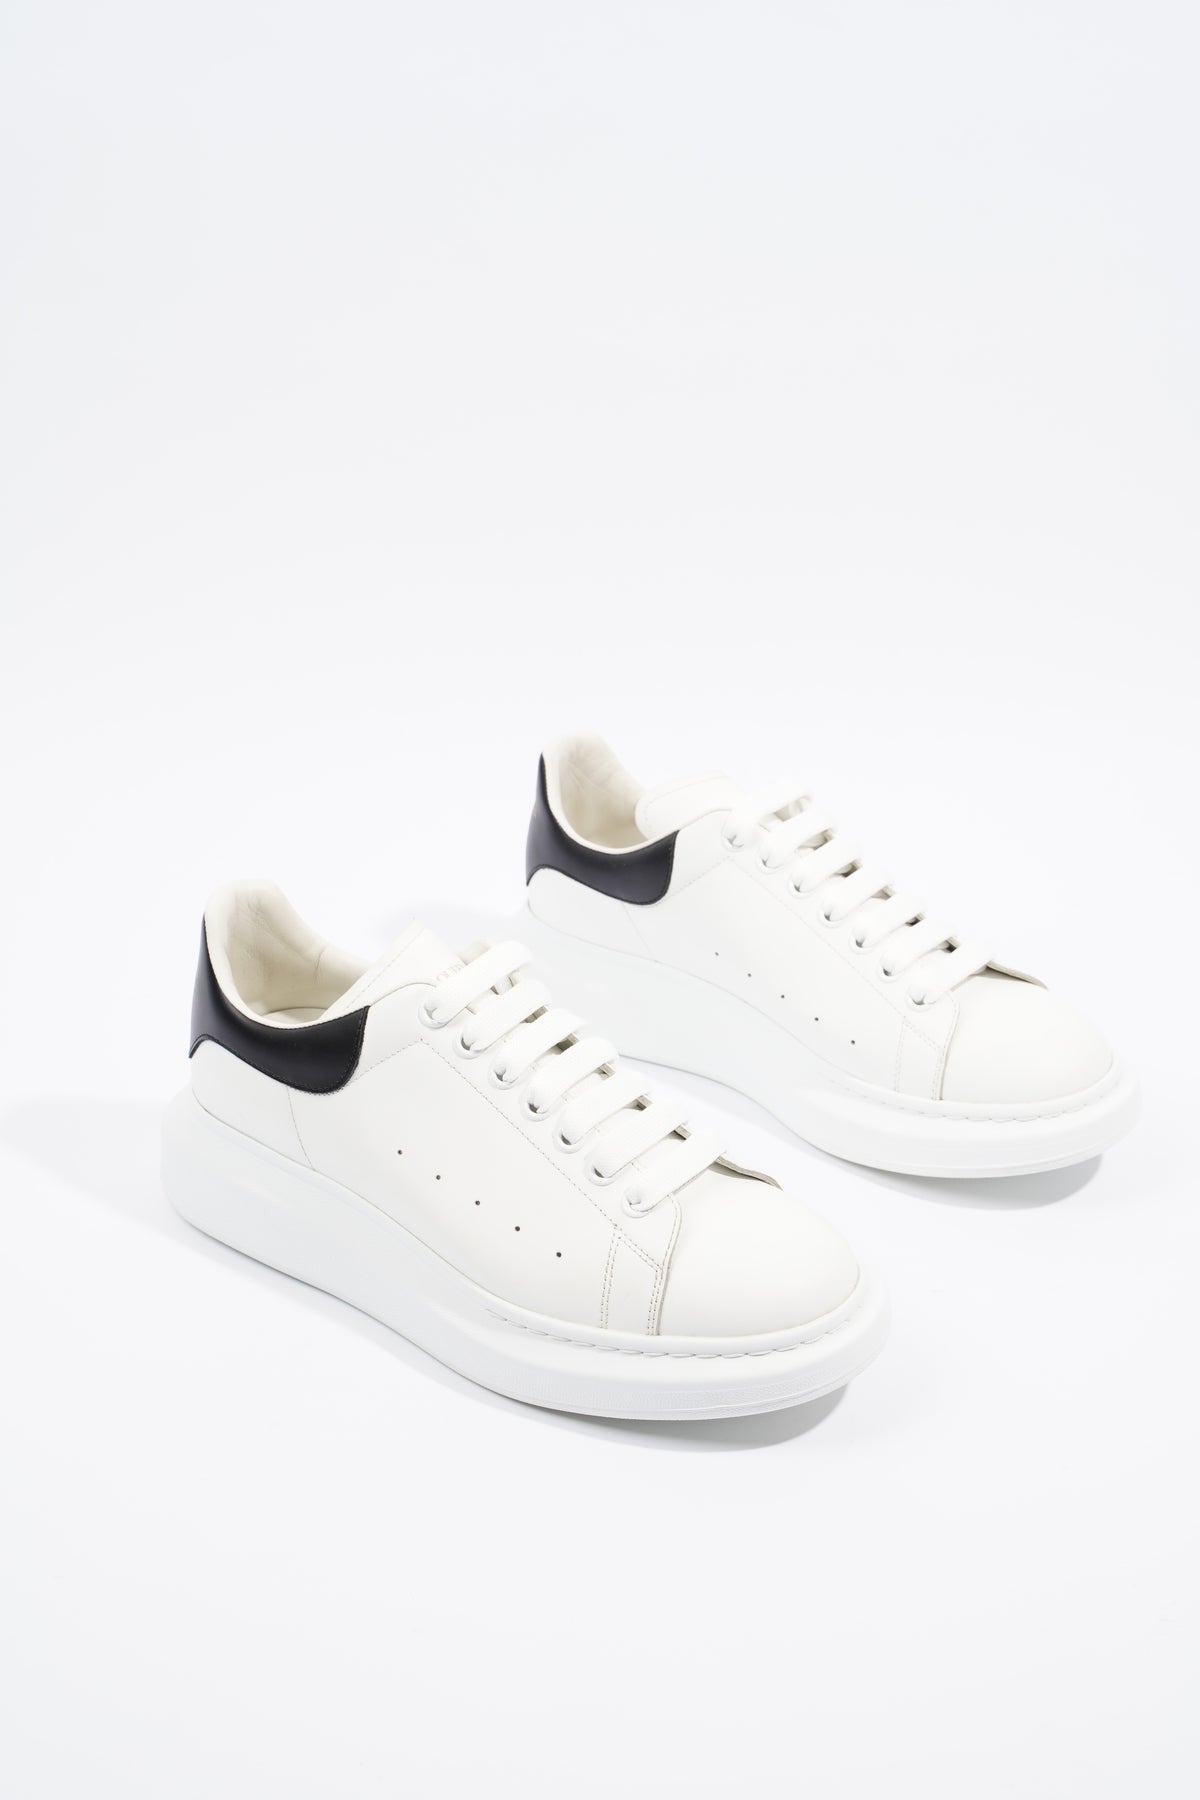 Alexander McQueen Oversized Sneaker (Size UK9) - Black/White (100%  AUTHENTIC)